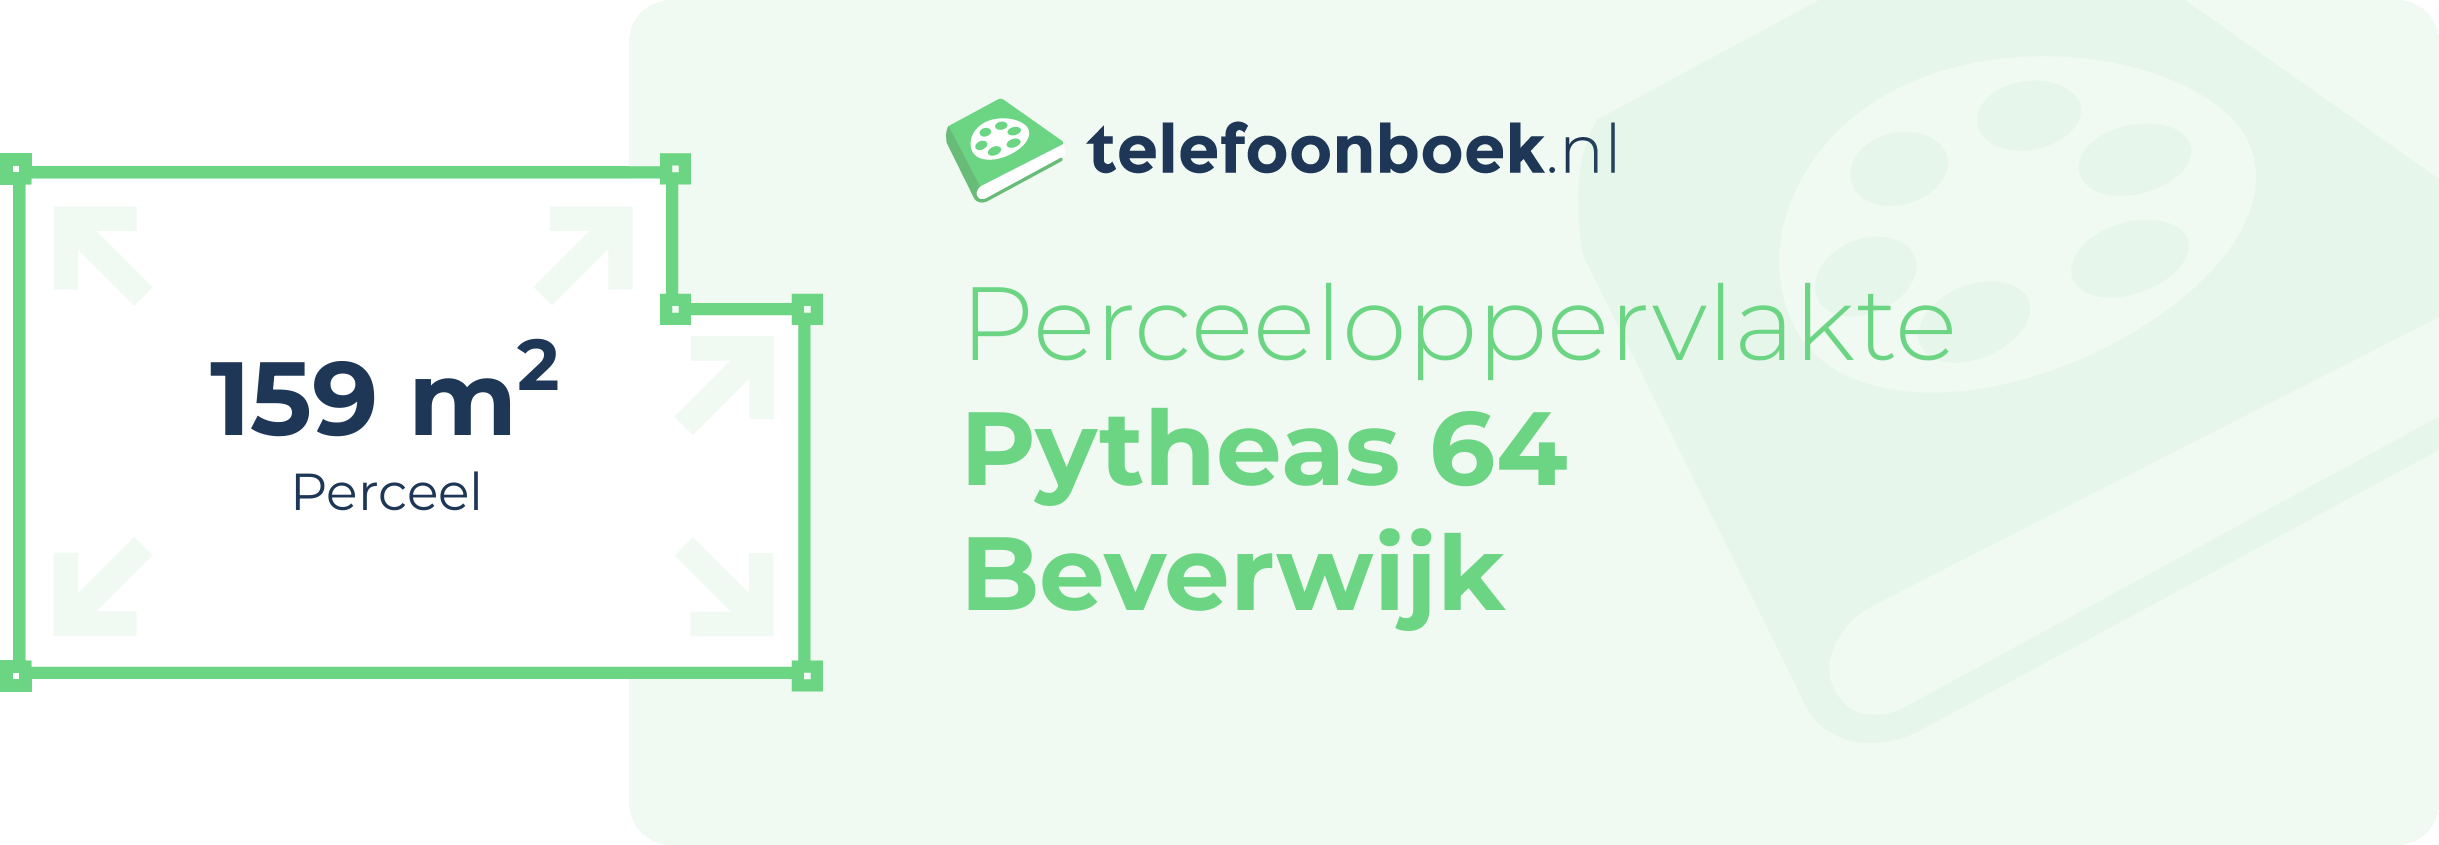 Perceeloppervlakte Pytheas 64 Beverwijk